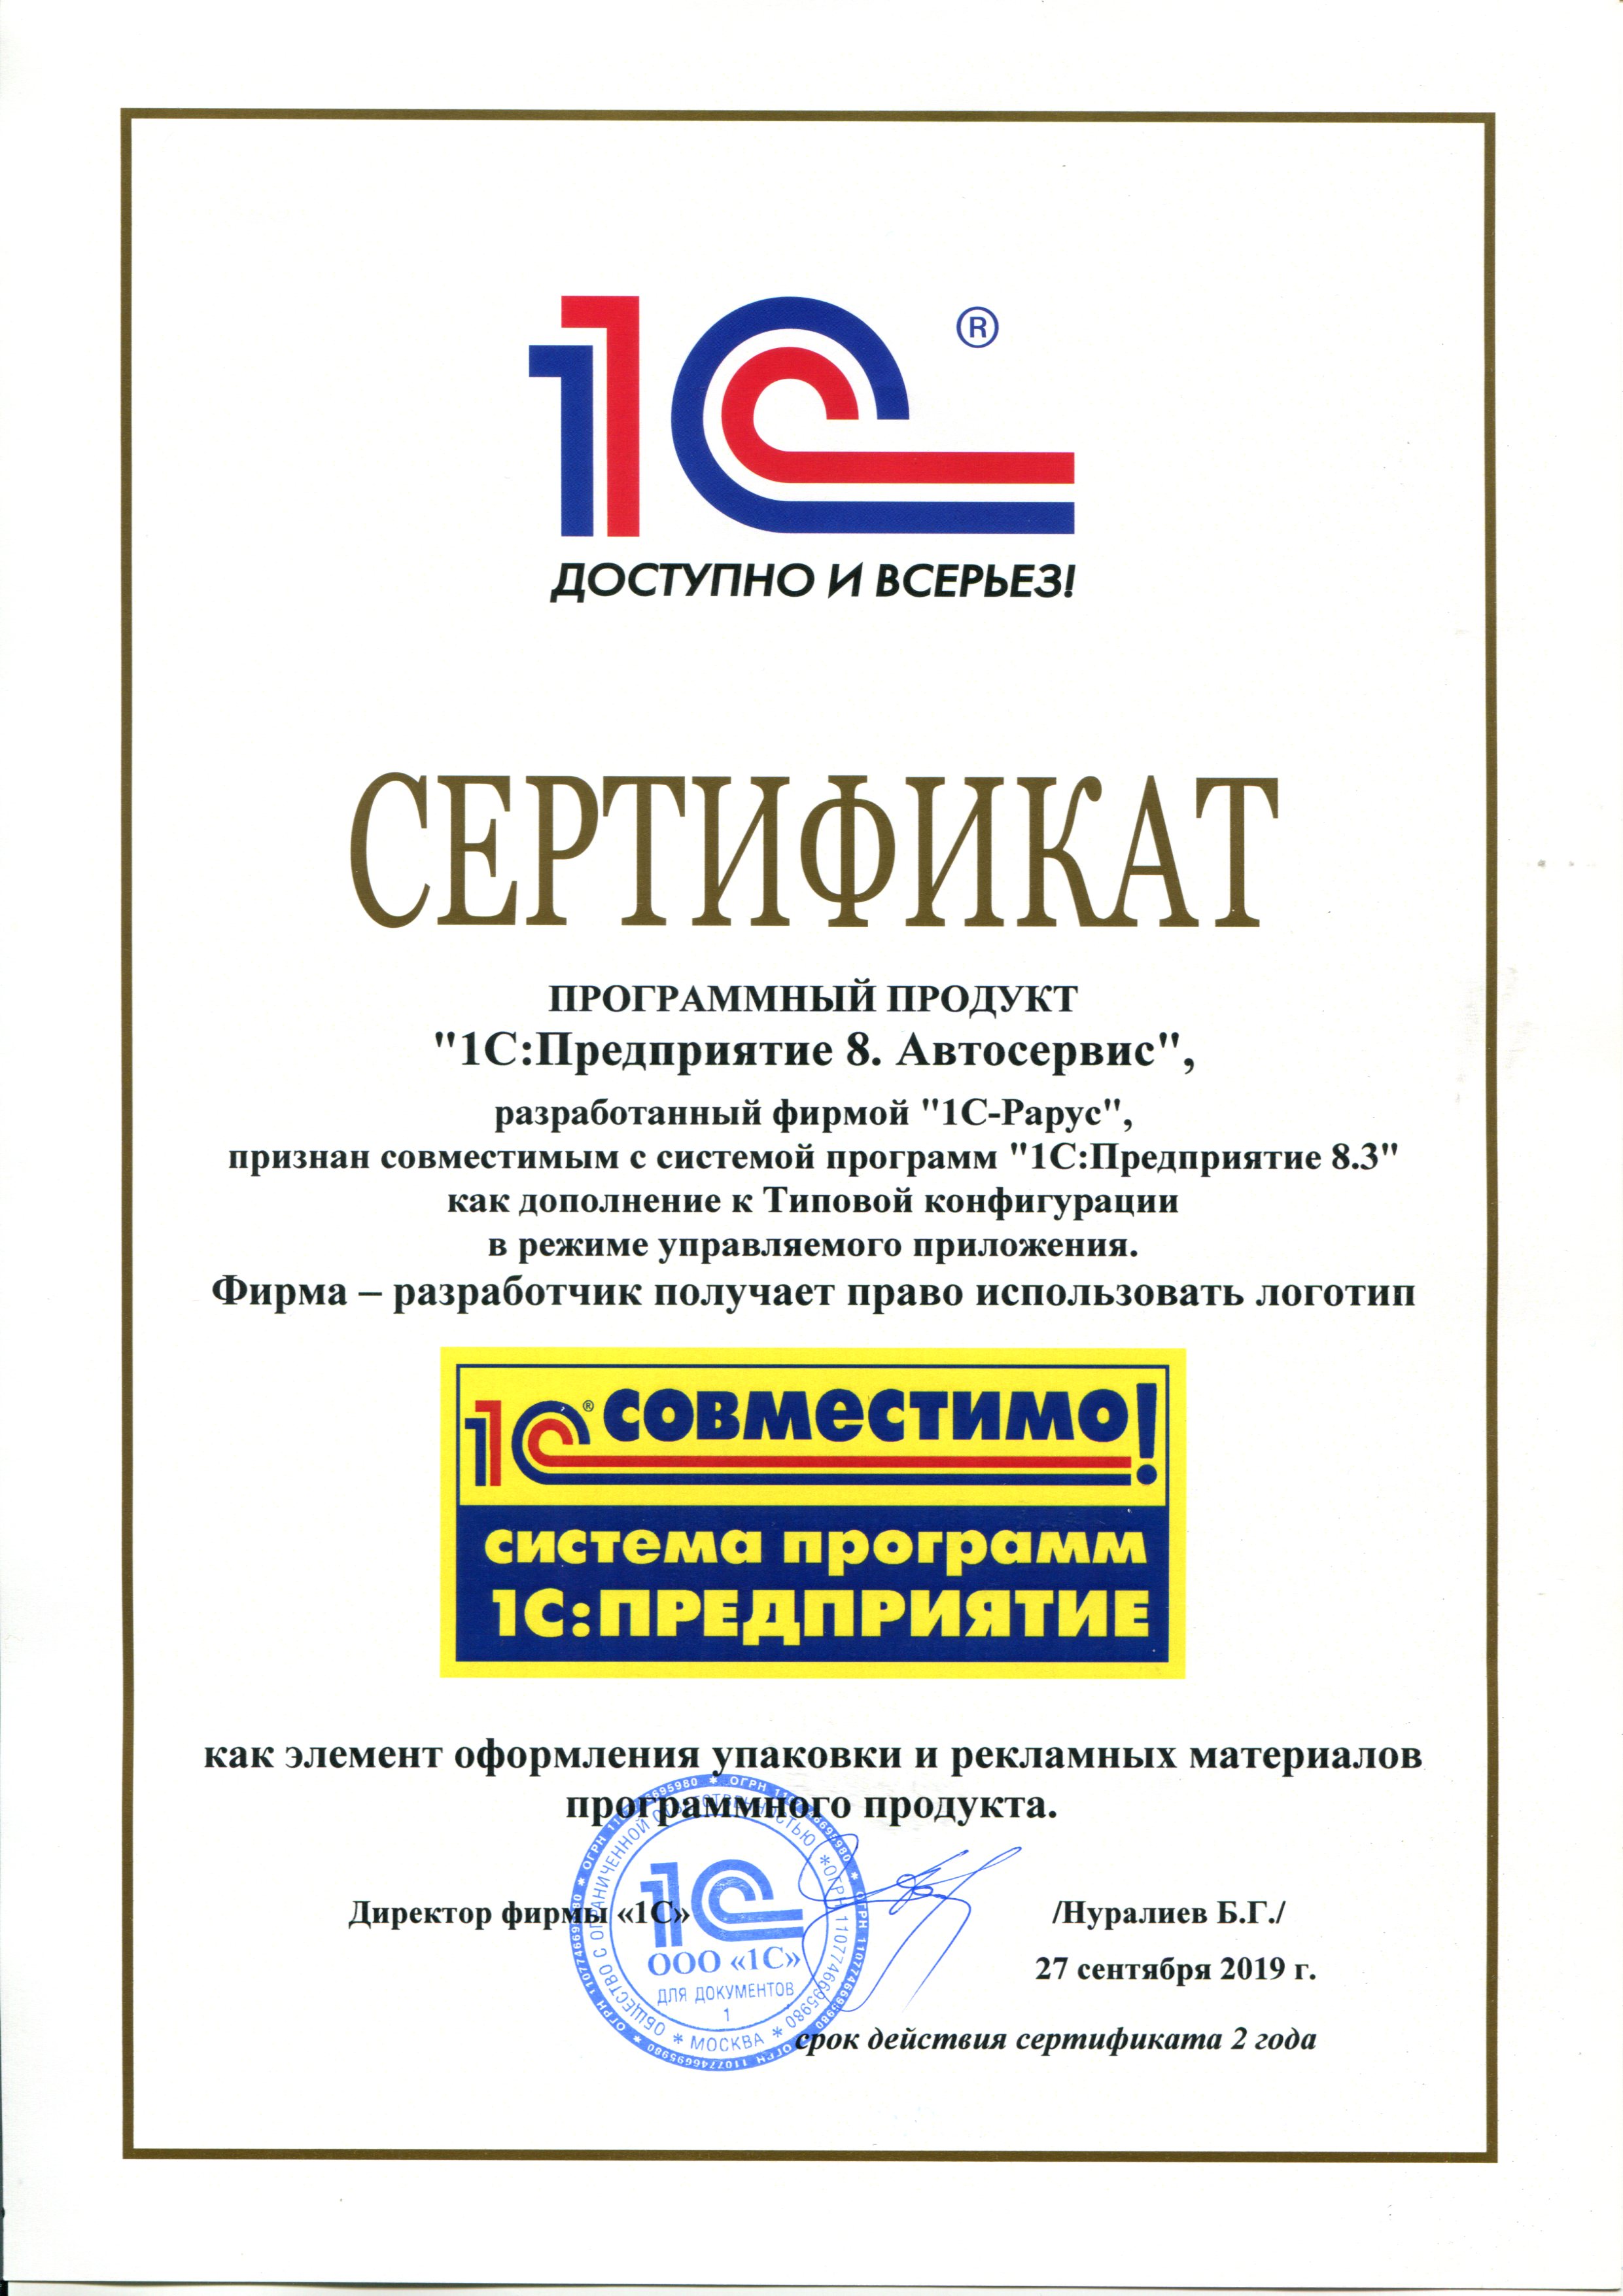 Решение «1С:Автосервис» успешно прошло сертификацию «Совместимо! Система программ 1С:Предприятие»